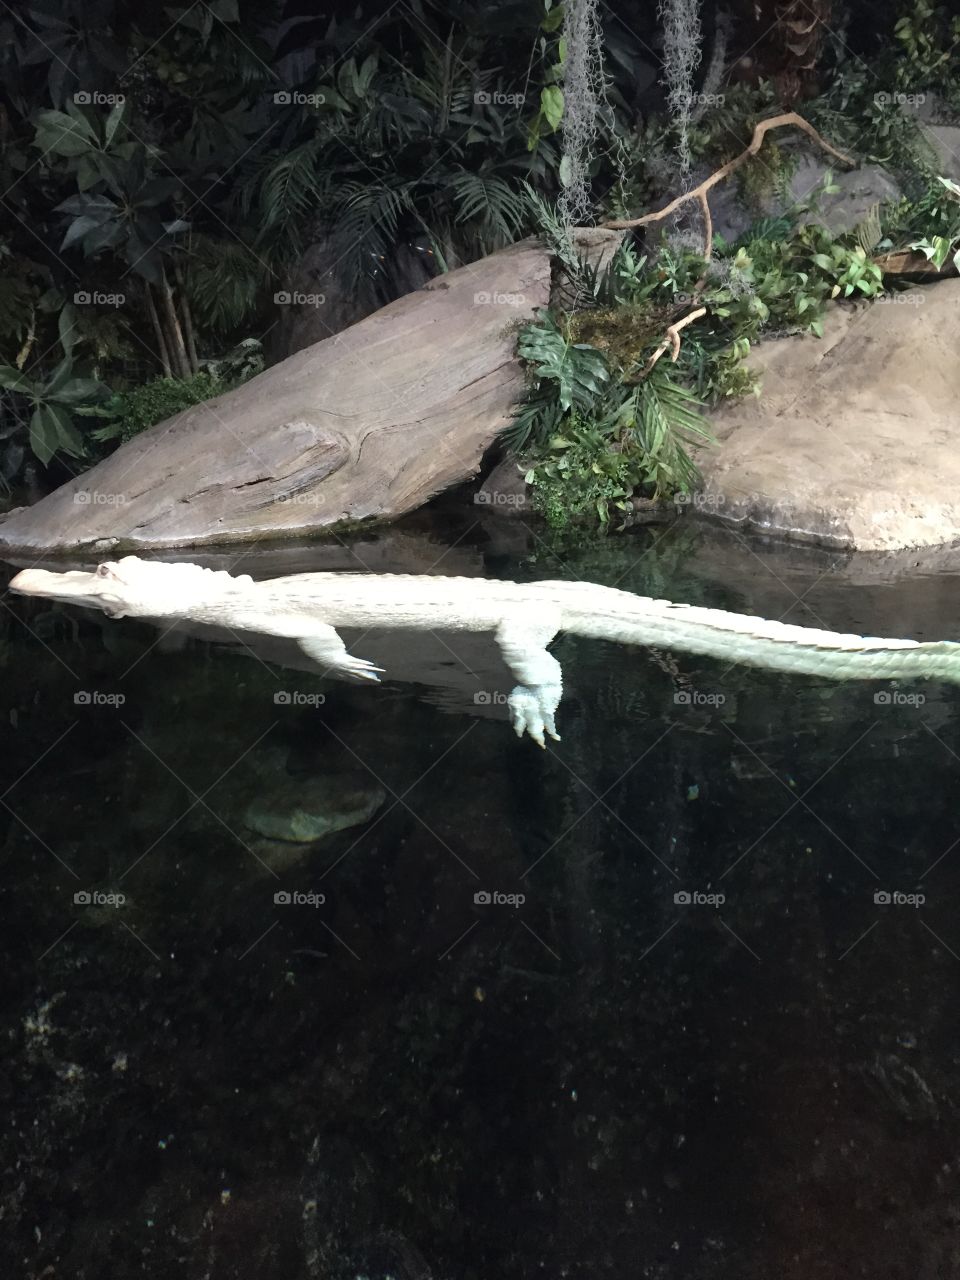 Albino Alligator 
